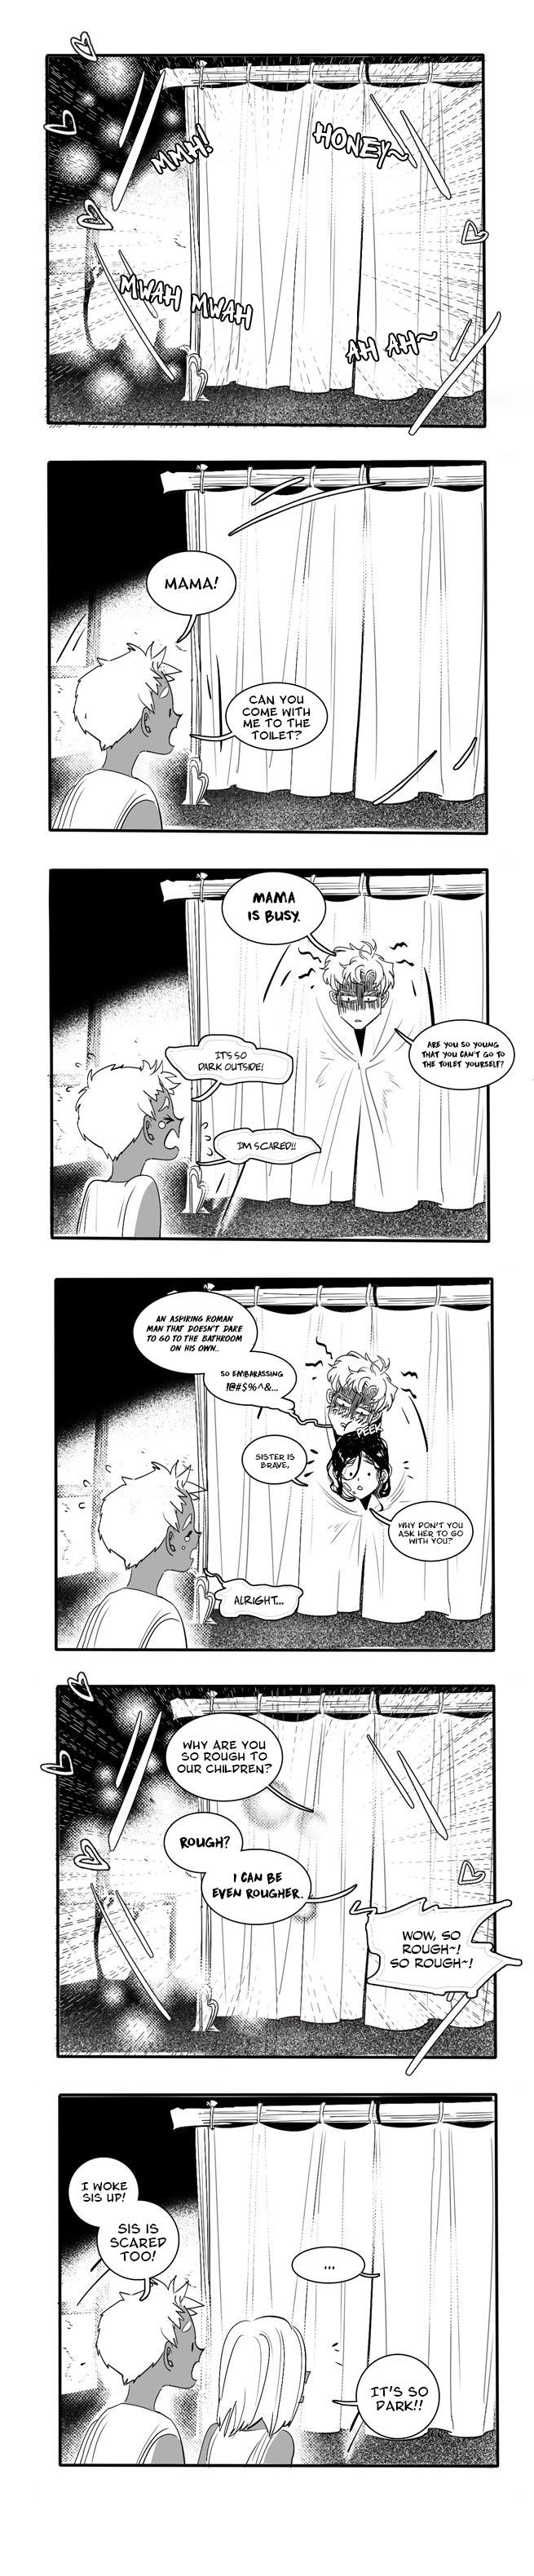 The Djinn - Page 3